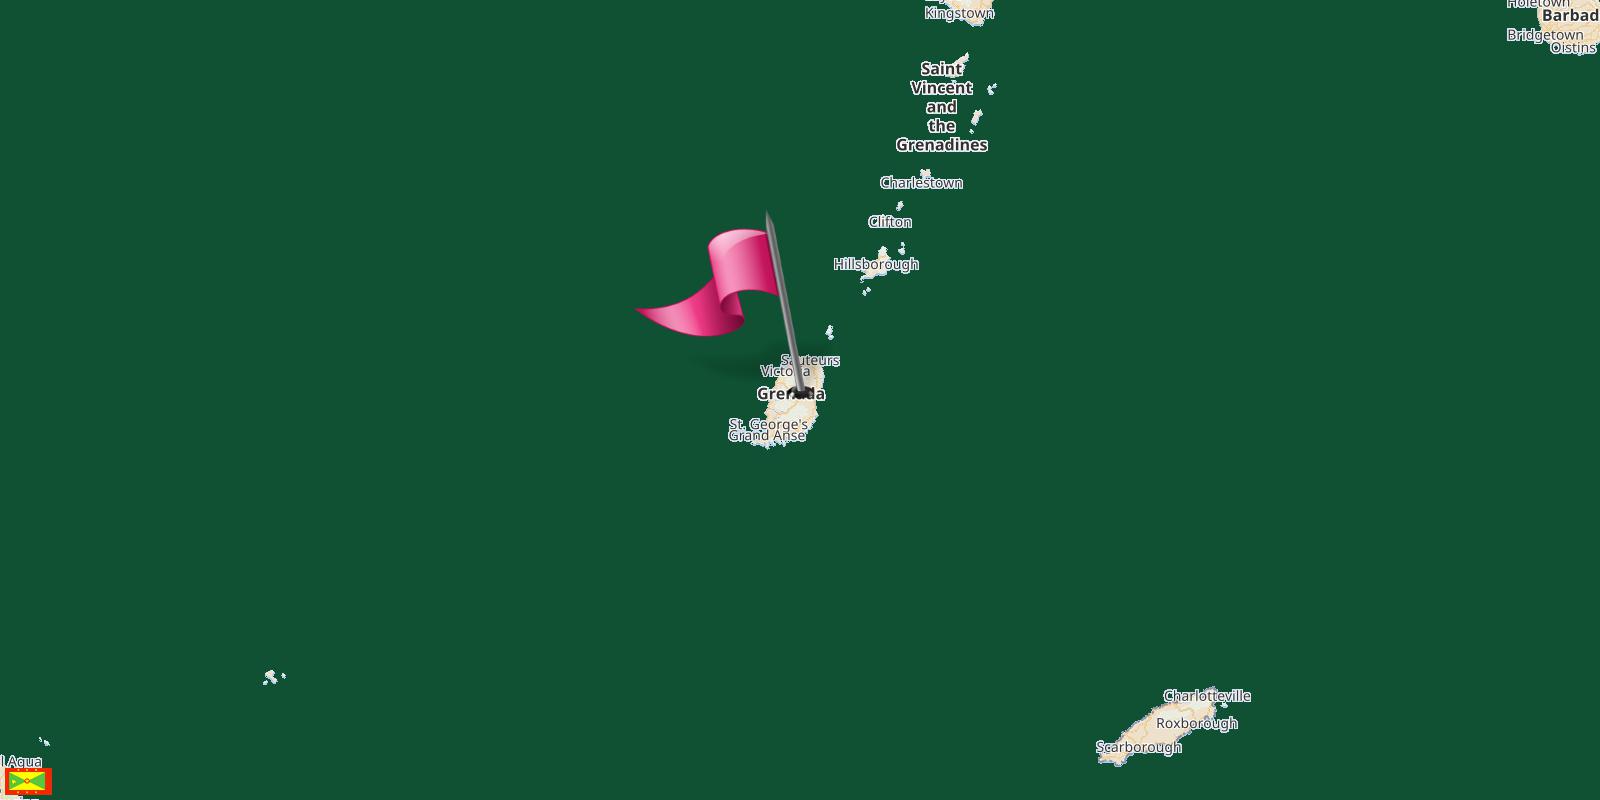 Grenada map